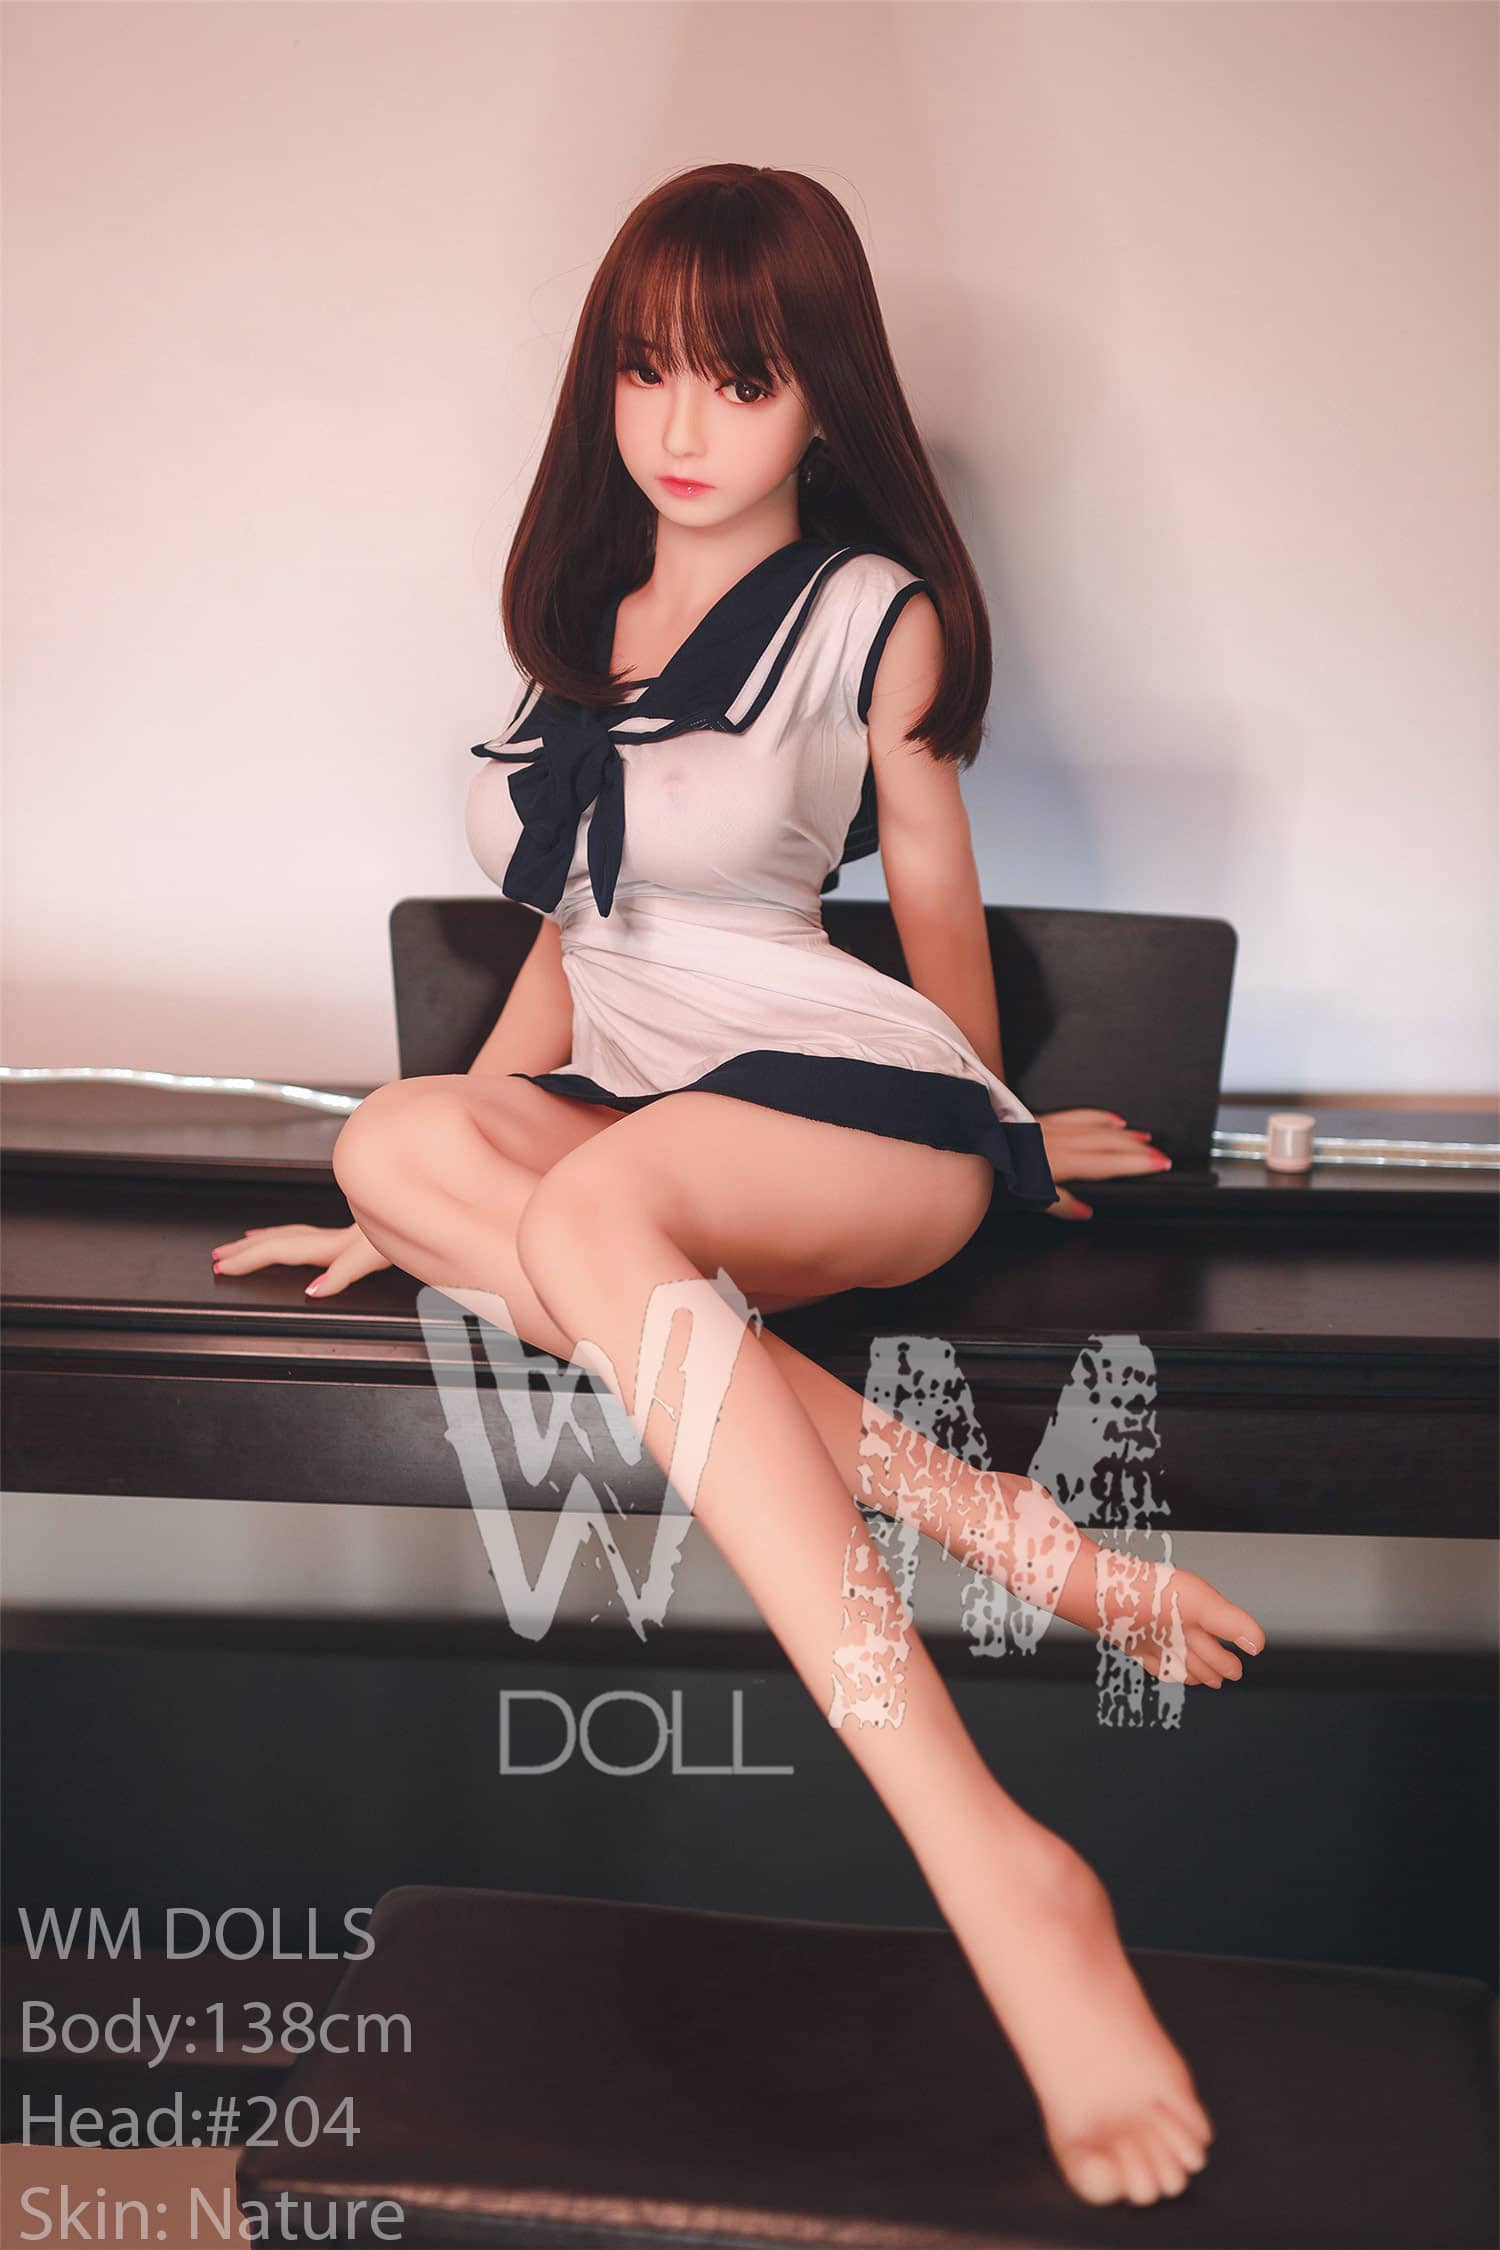 WM Doll 138cm STPE Small Breasts - Scarlett WM DOLL Littlelovedoll